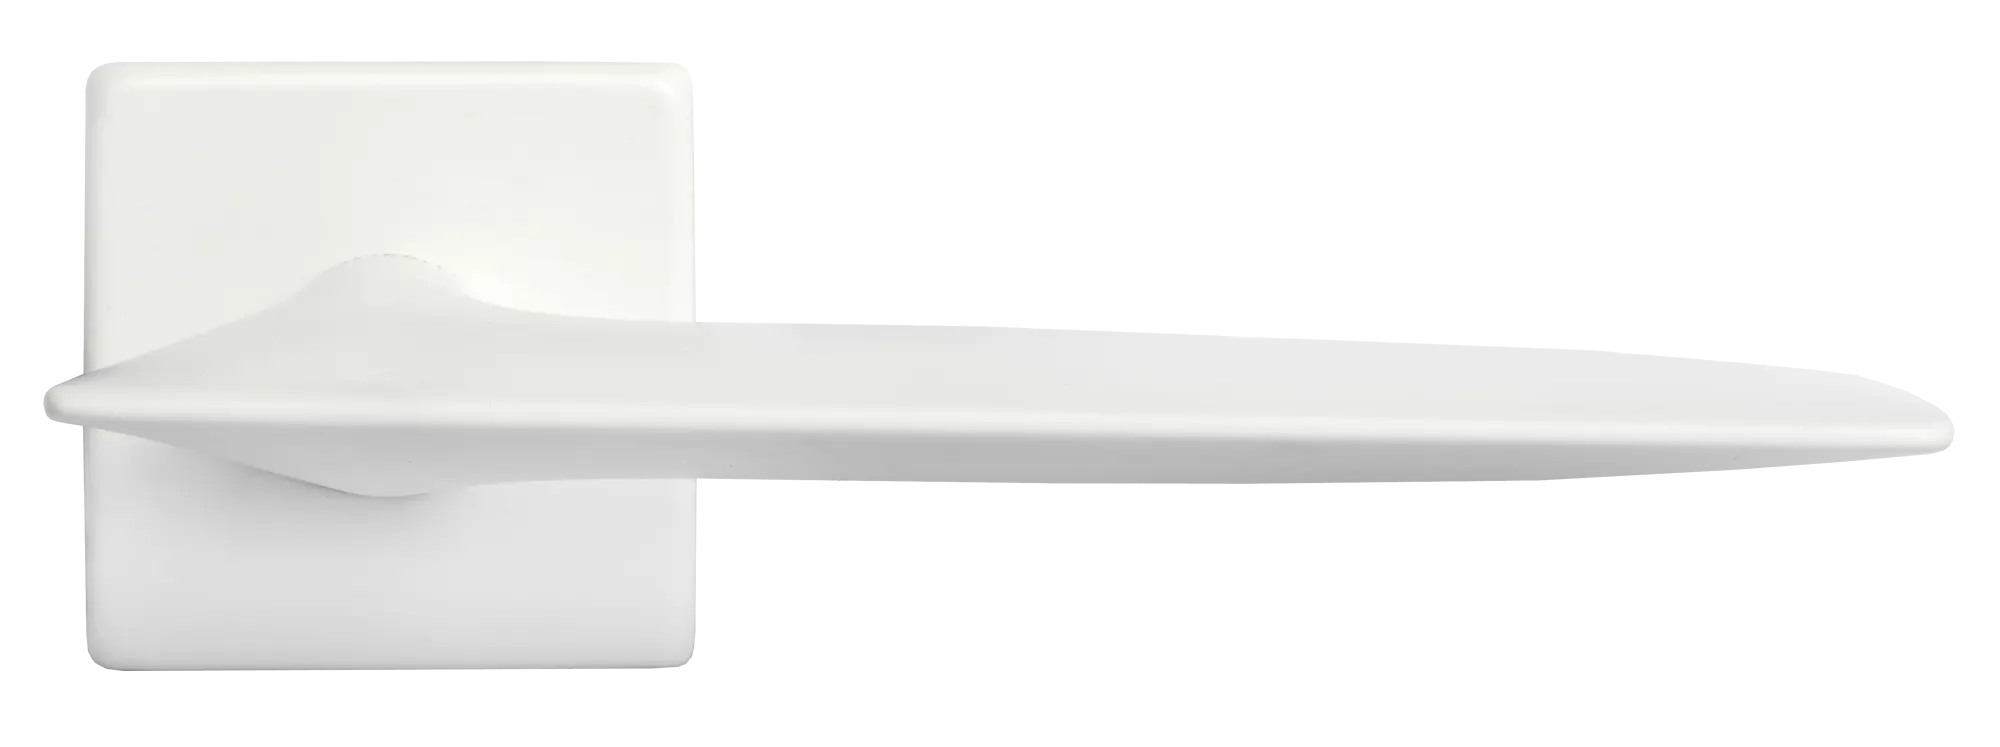 GALACTIC S5 BIA, ручка дверная, цвет - белый фото купить в Южно-Сахалинске